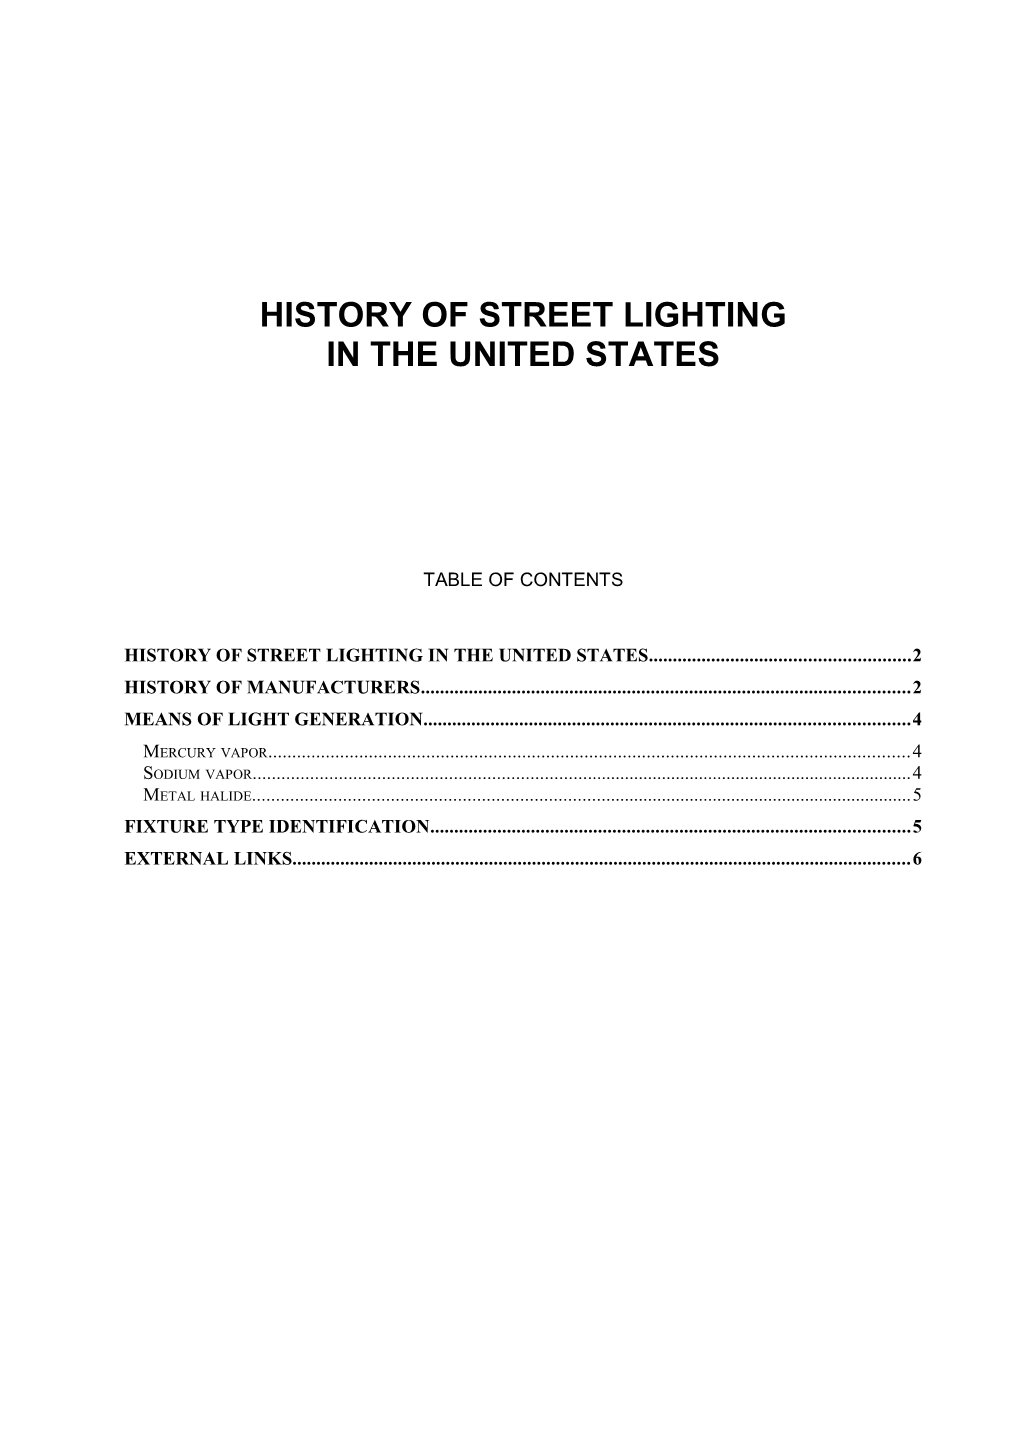 History of Street Lighting